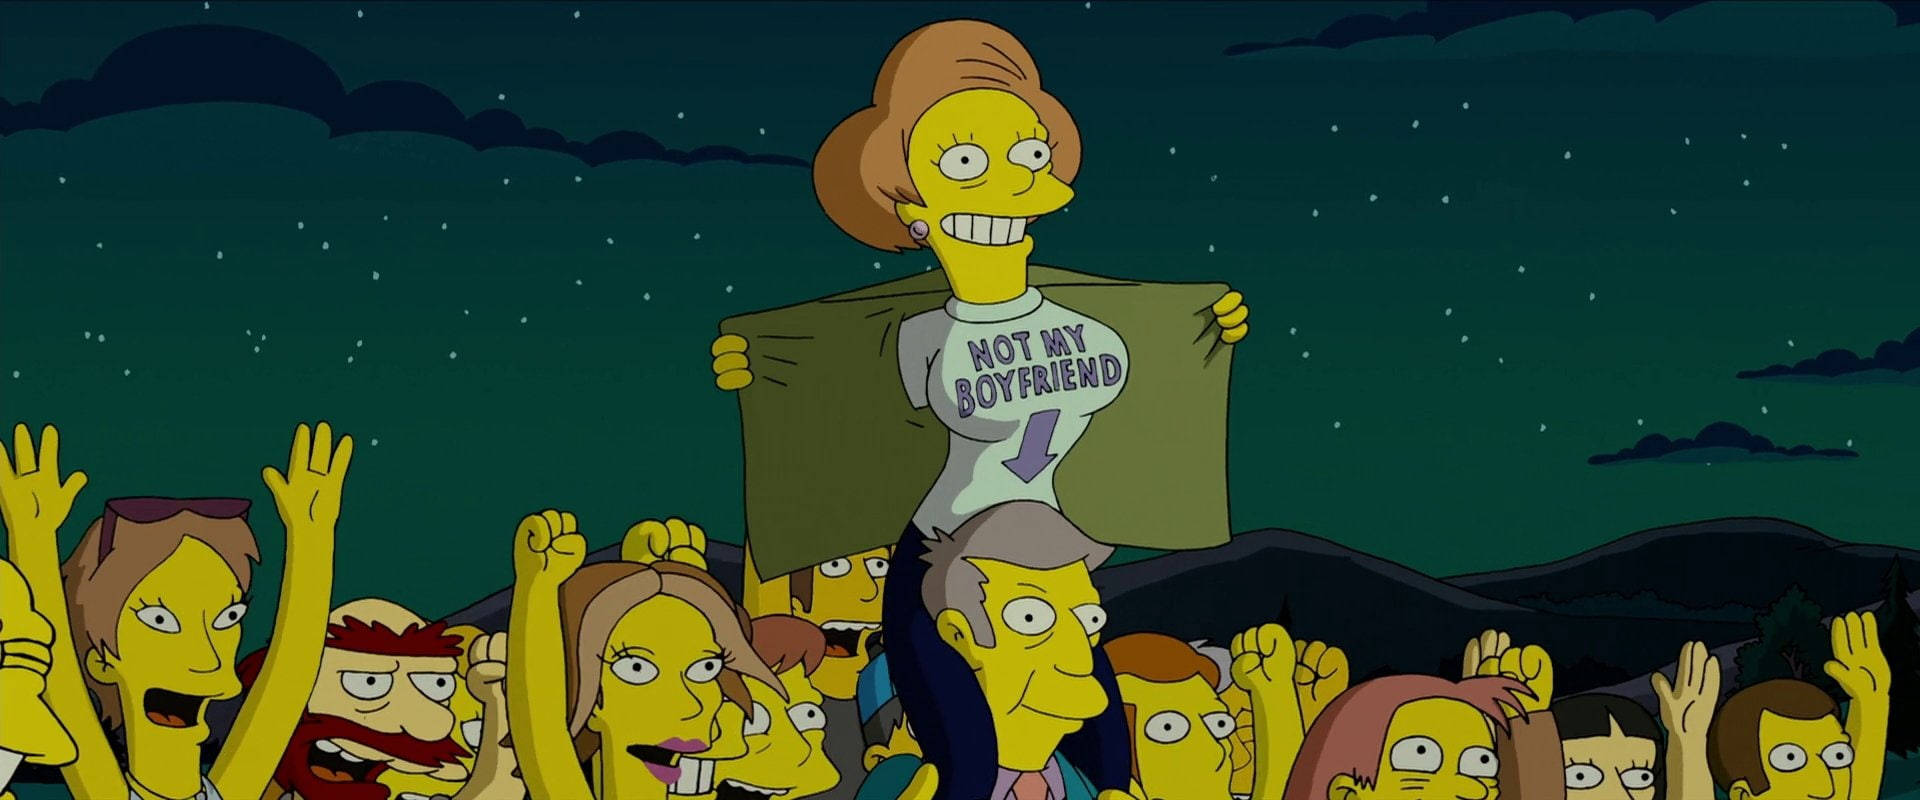 Ednakrabappel Do Filme Os Simpsons Papel de Parede